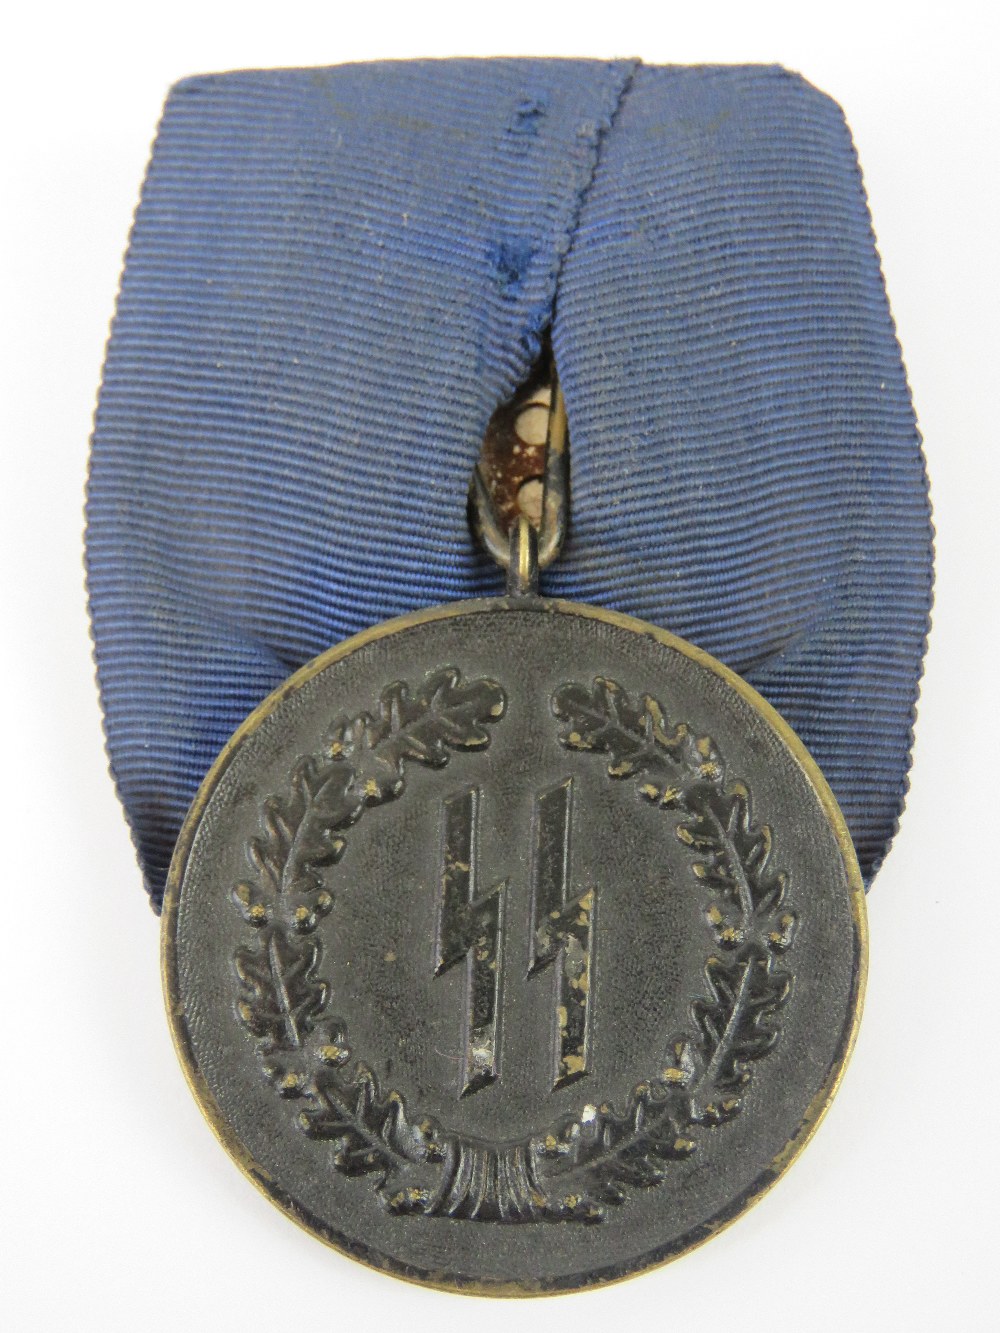 An SS 4 year Long Service medal, bearing